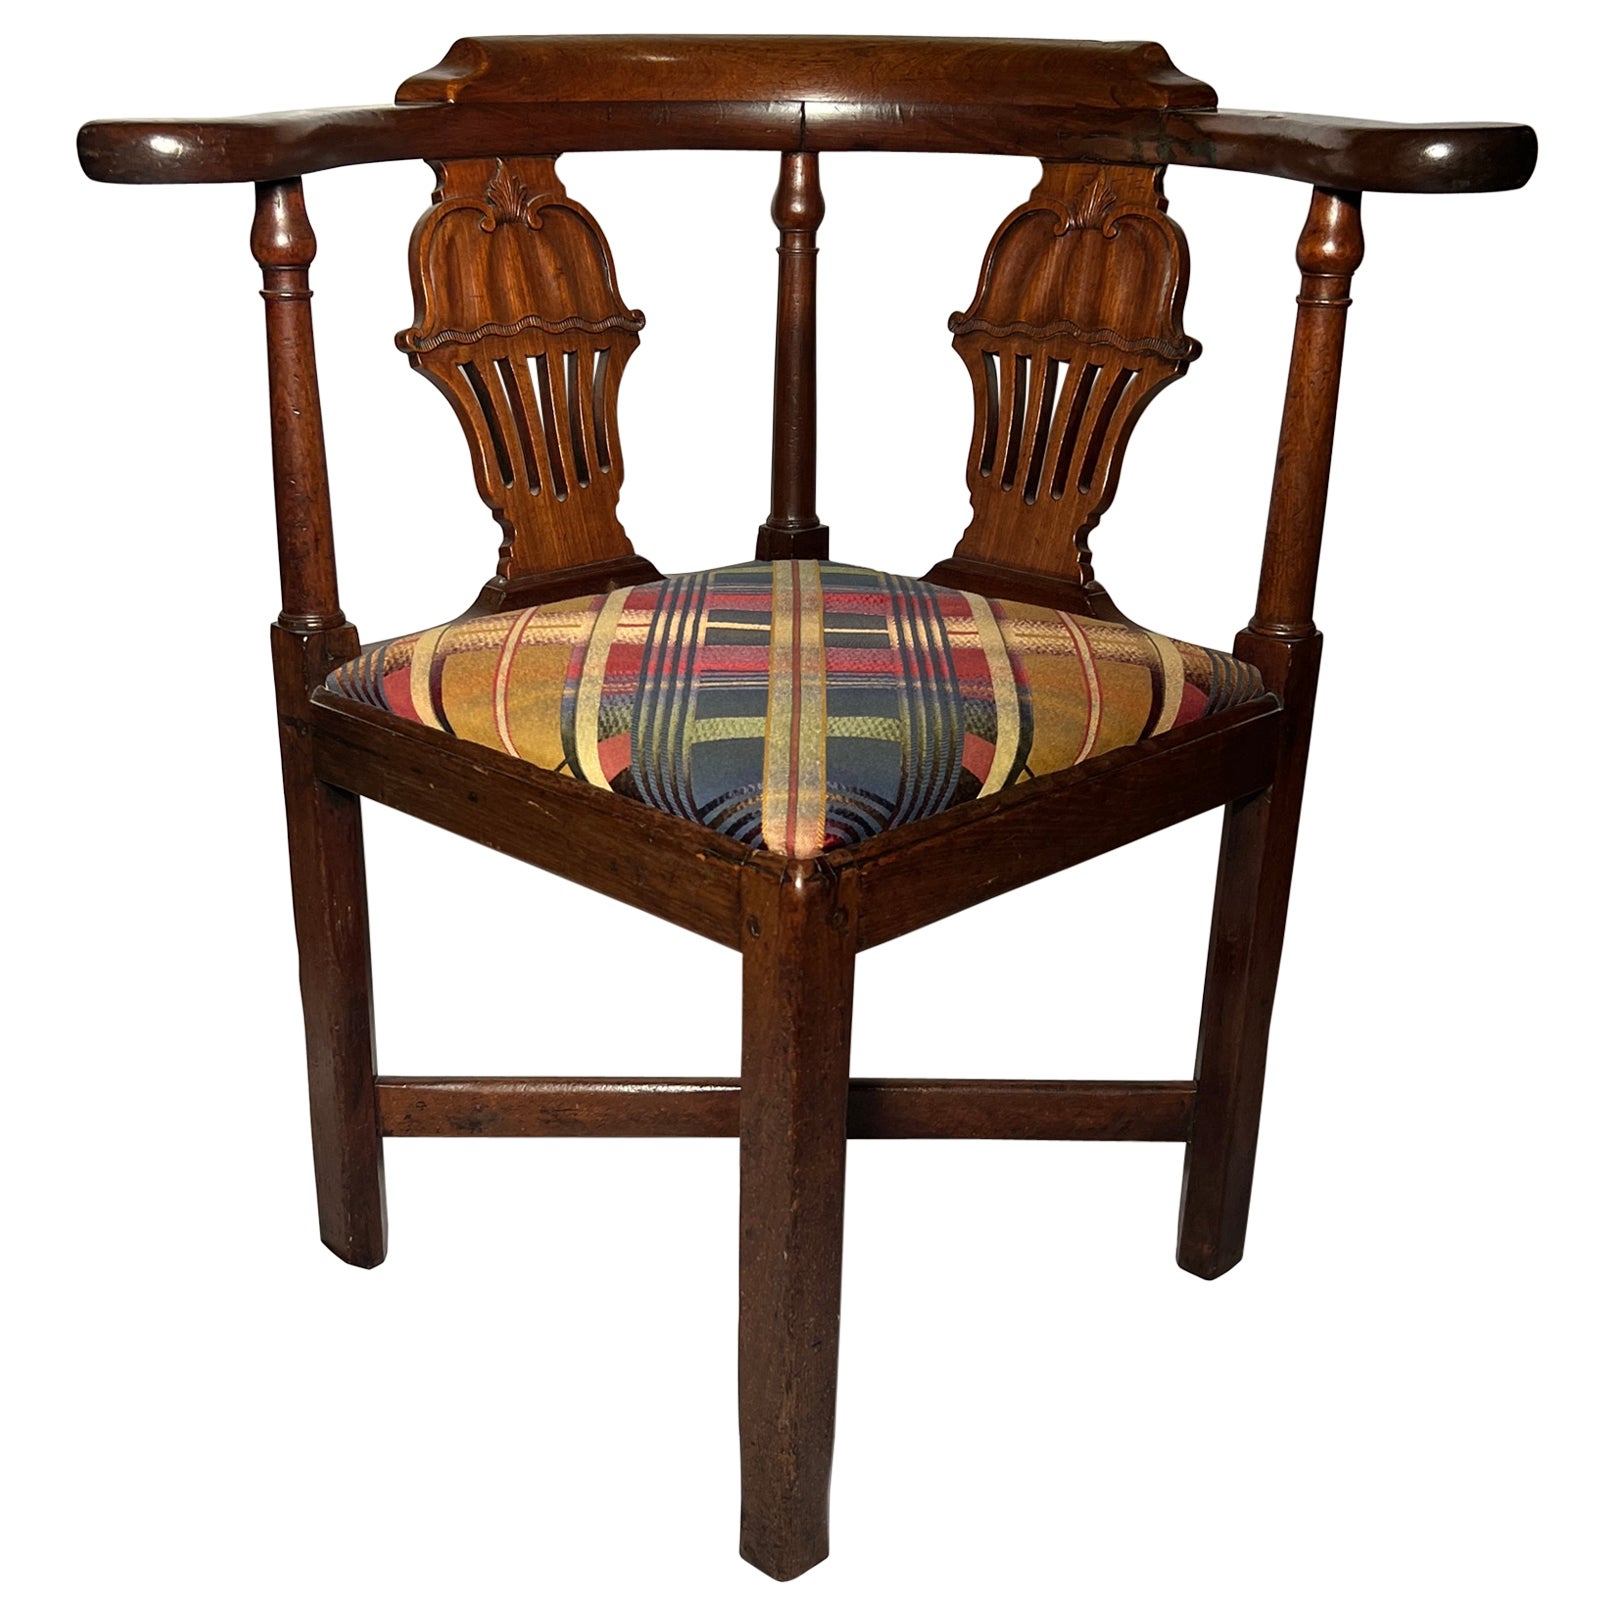 Ancienne chaise d'angle anglaise en acajou vers 1880